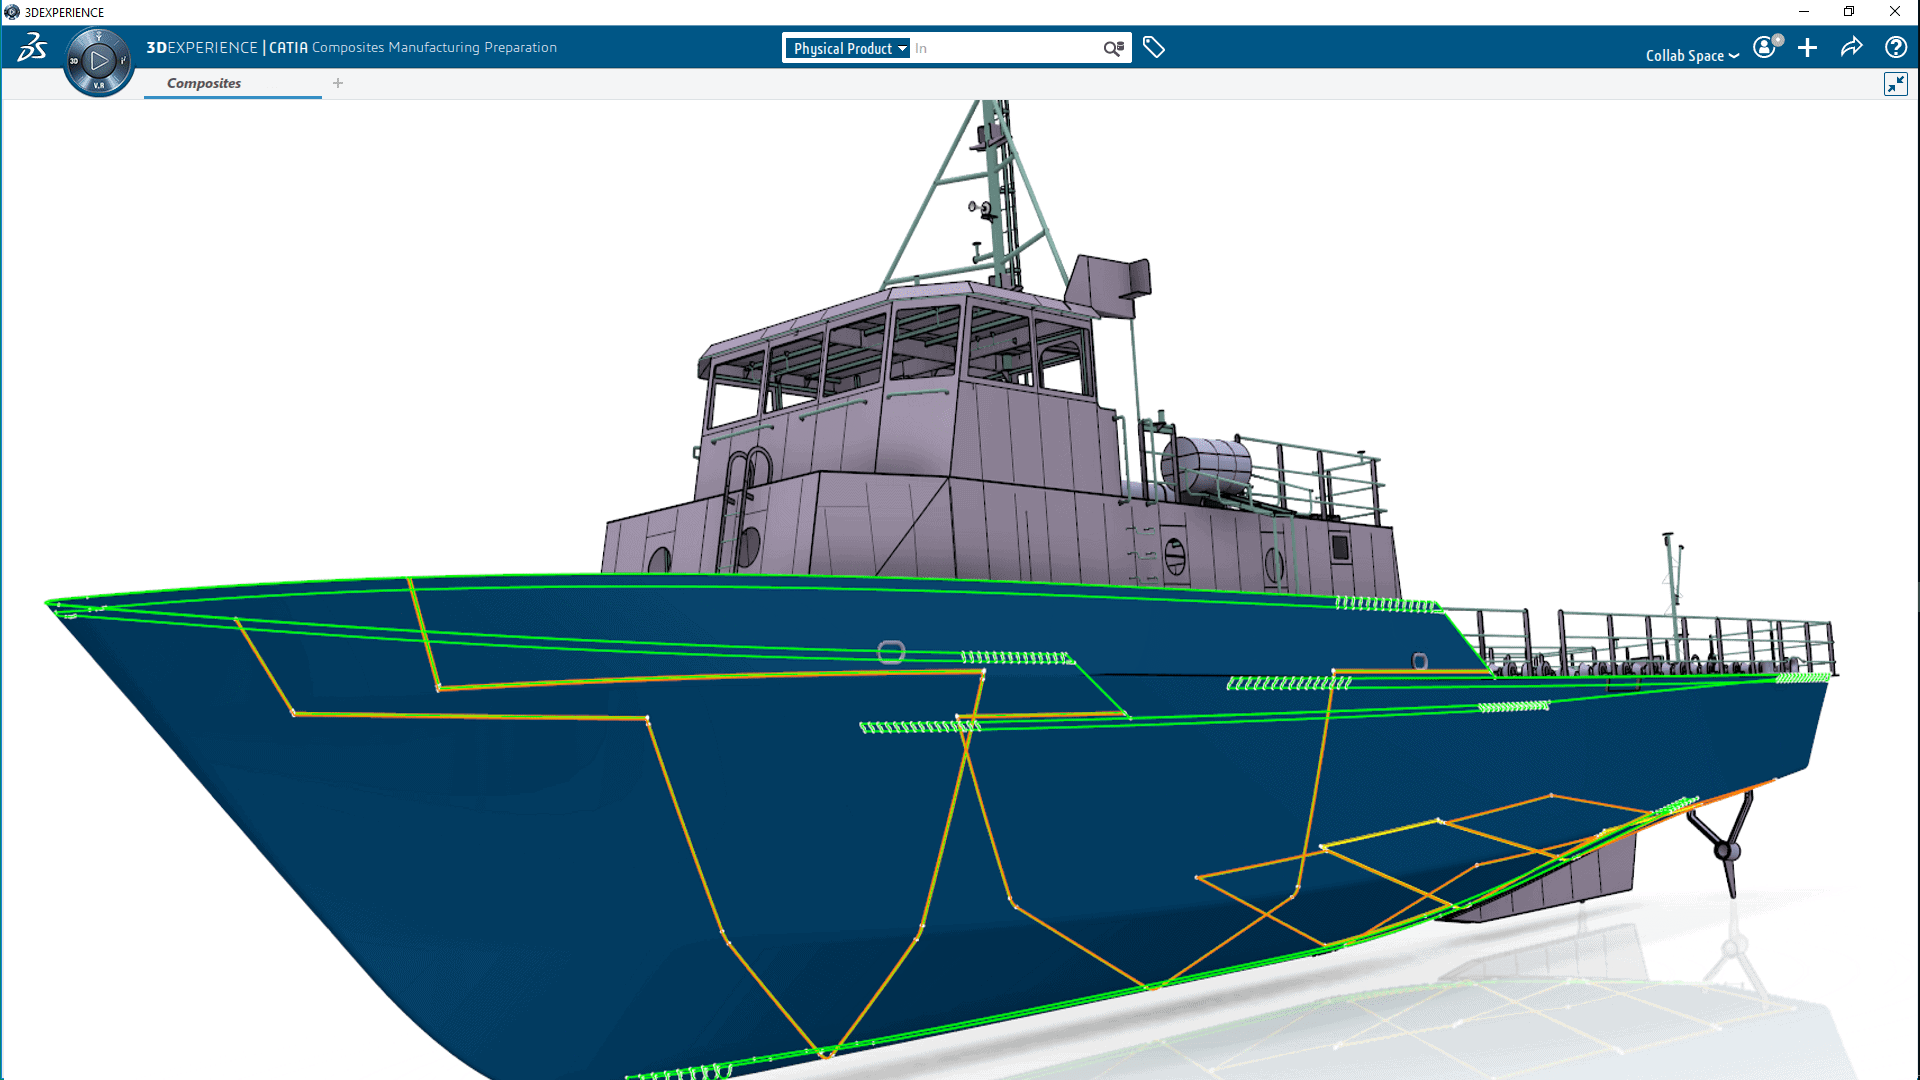 Composites Designer For Marine And Offshore (SHCOM) Overview Video